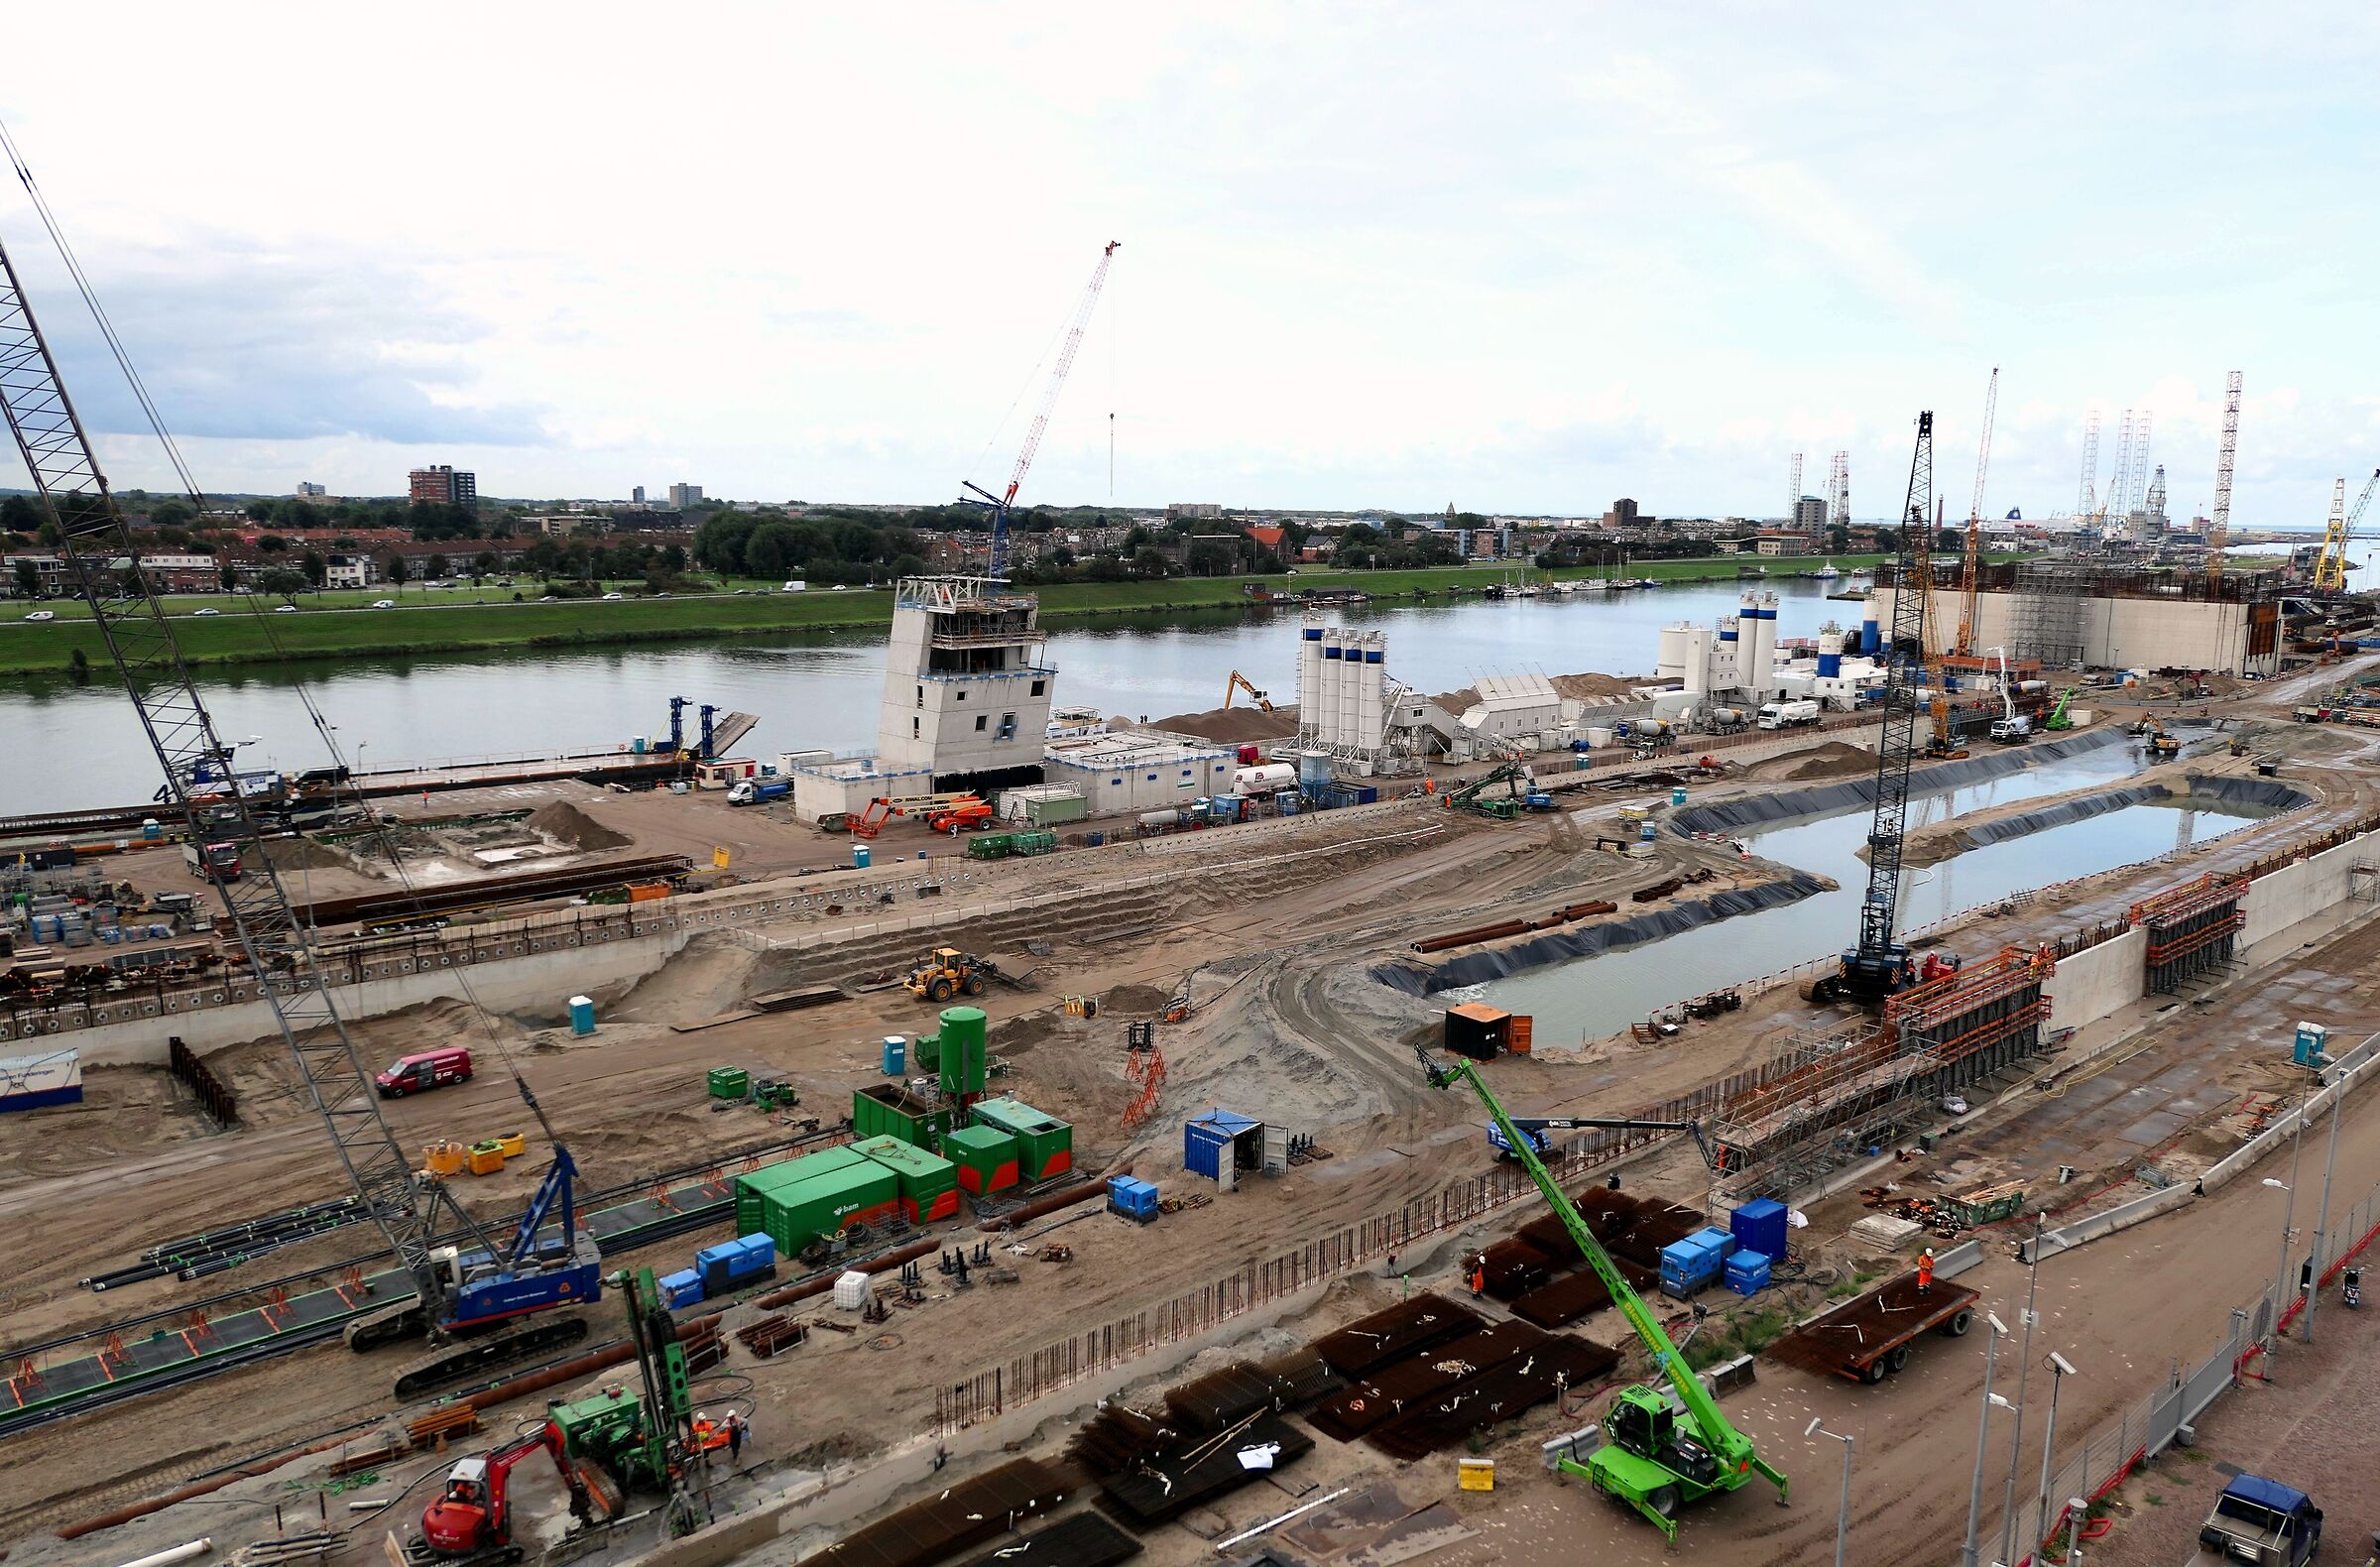 Amsterdam "New port under construction"...